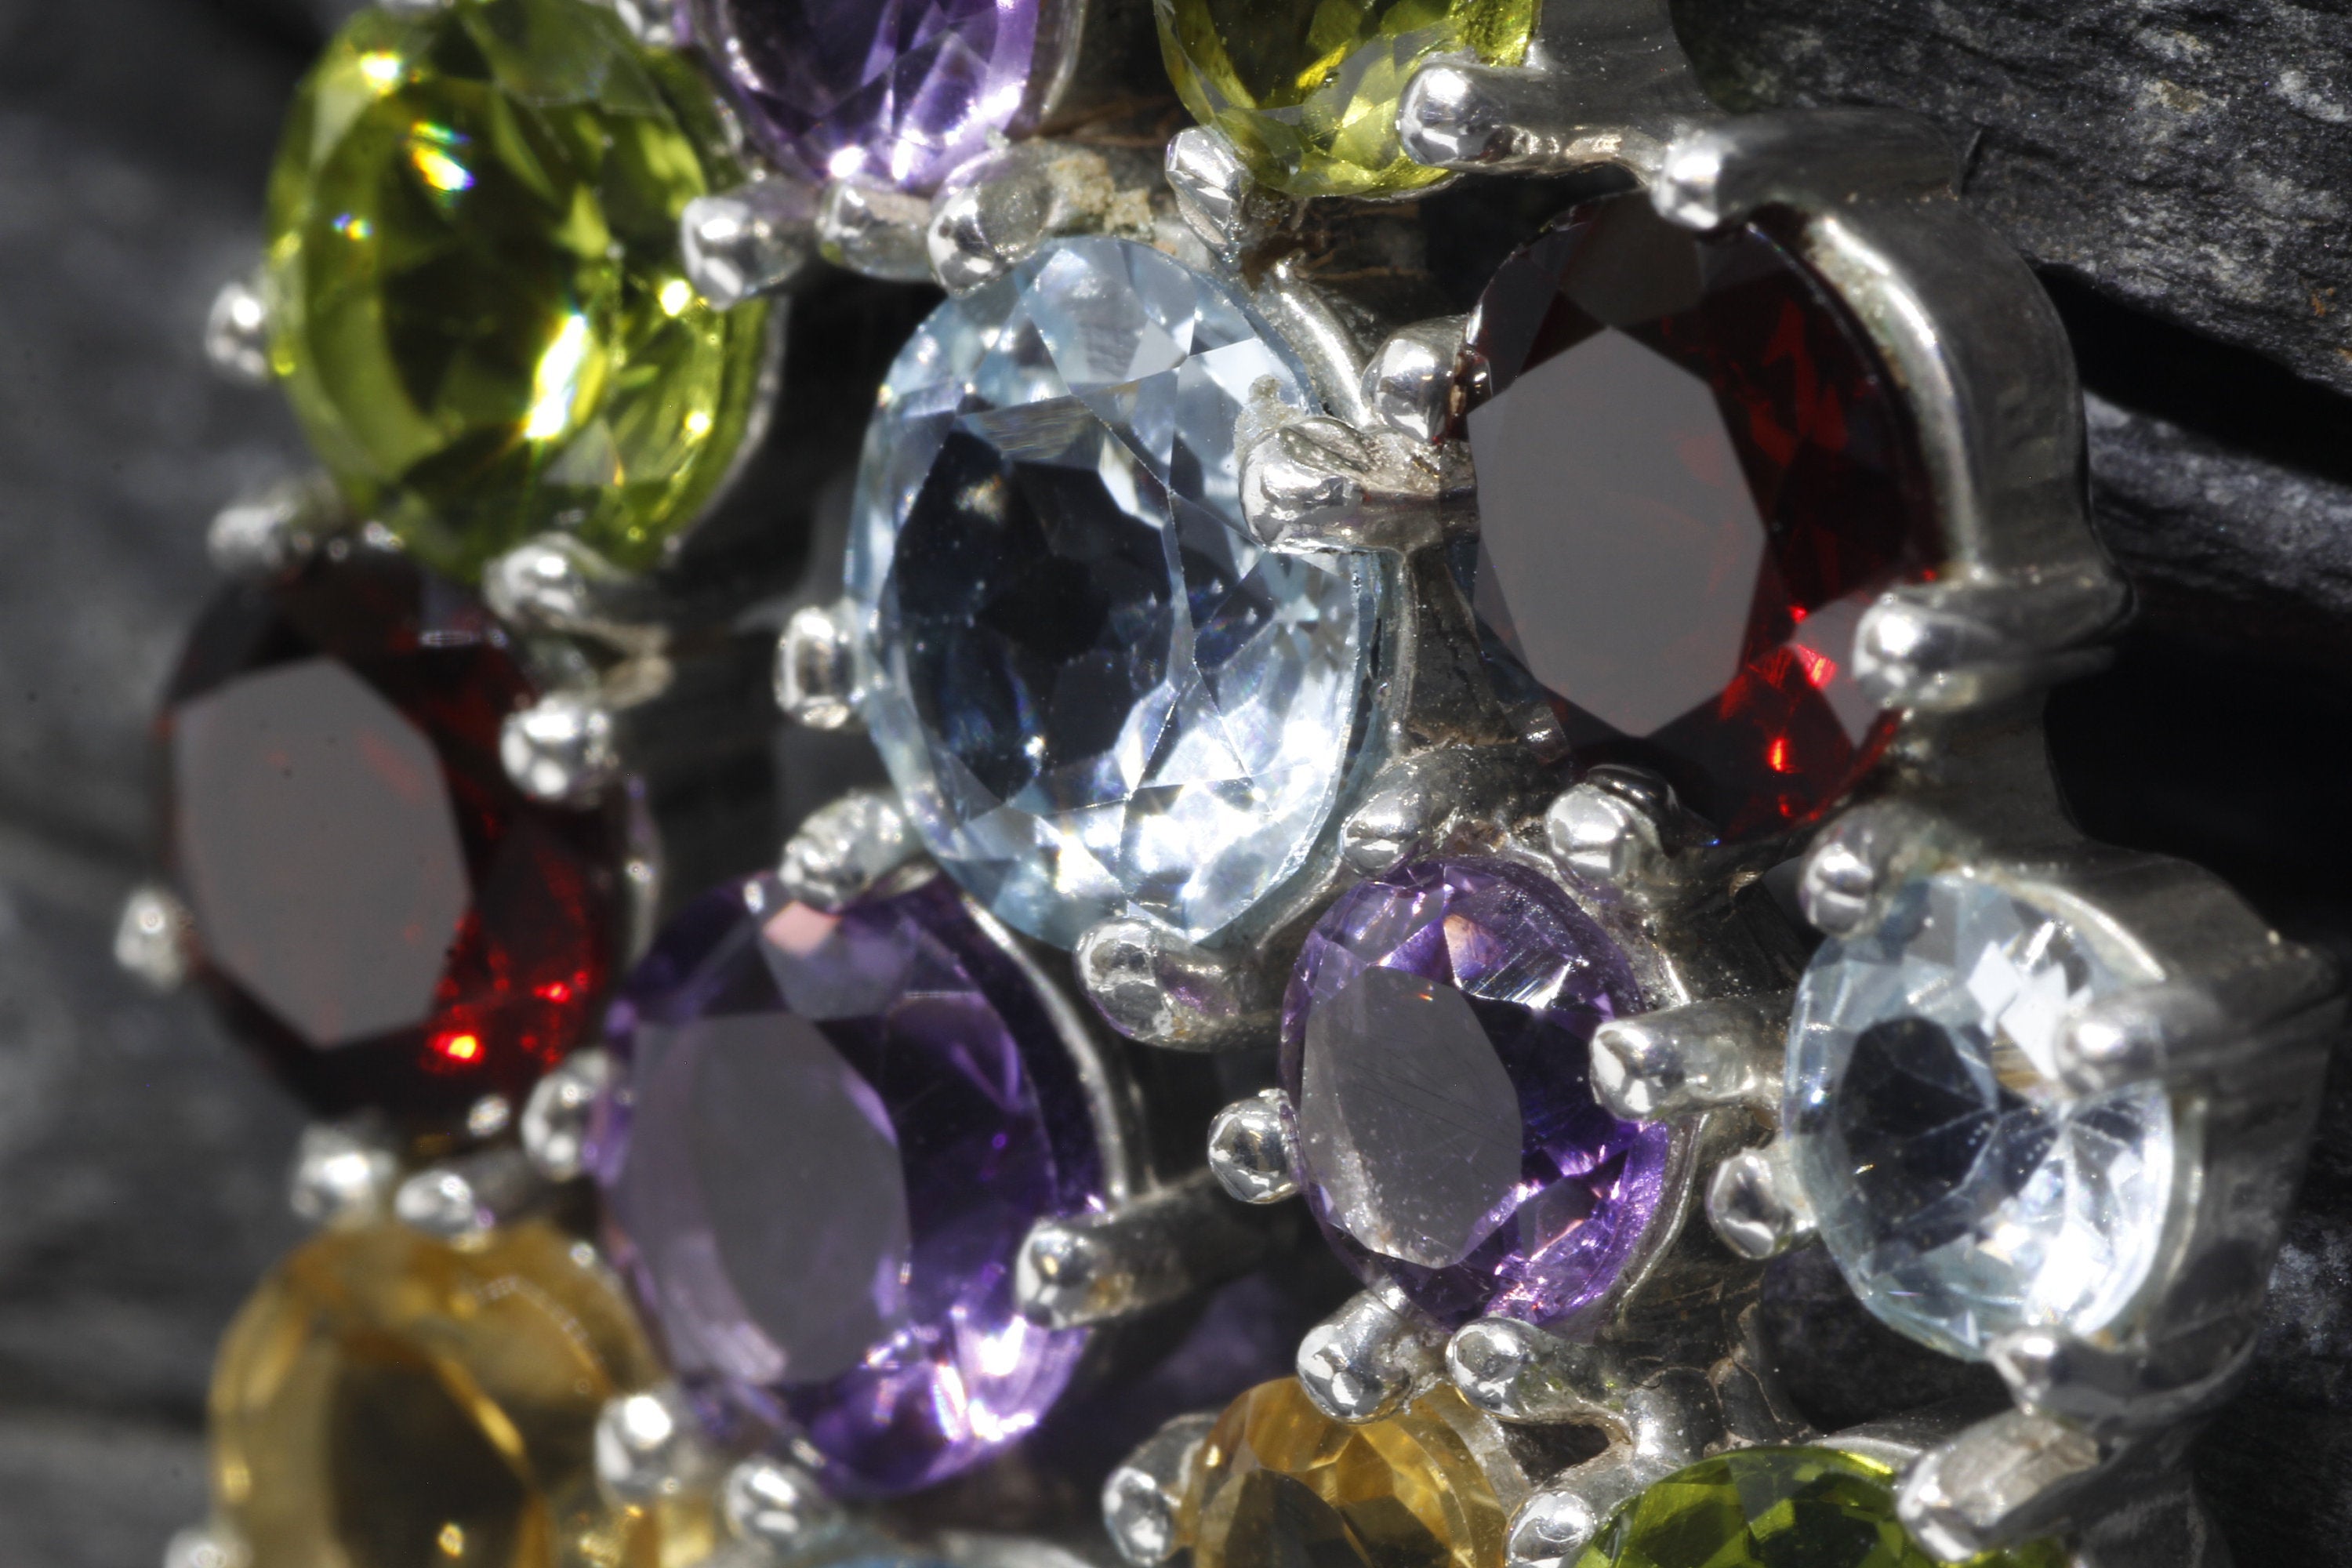 Large Gemstone Pendant, Colorful Pendant, Statement Necklace, Sparkly Pendant, Big Birthstone Pendant, Topaz Pendant, Solid Silver Pendant